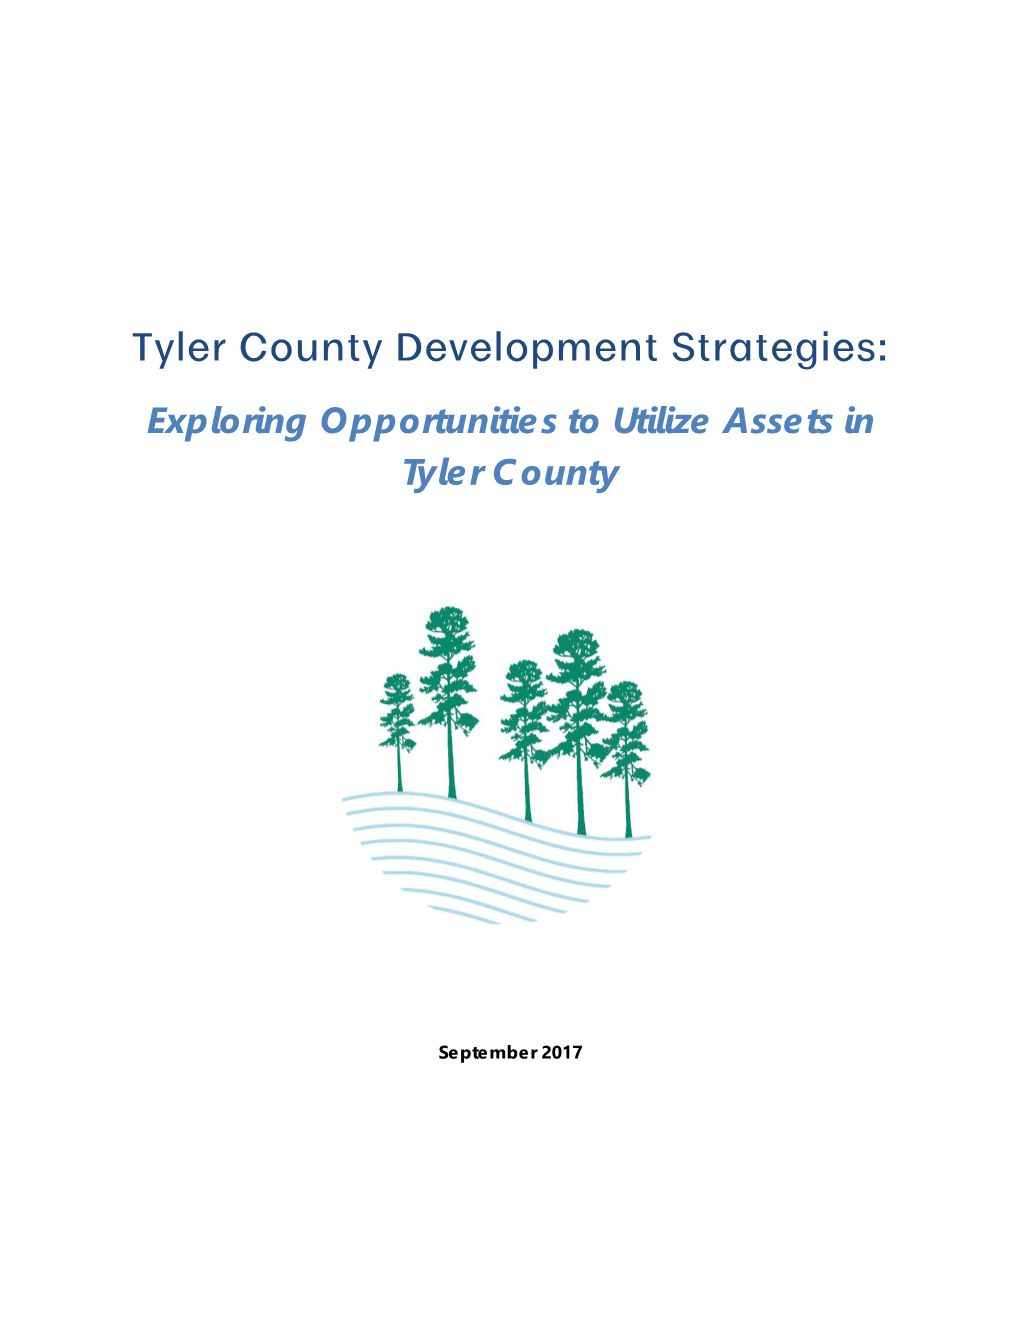 Tyler County Development Strategies: Exploring Opportunities to Utilize Assets in Tyler County